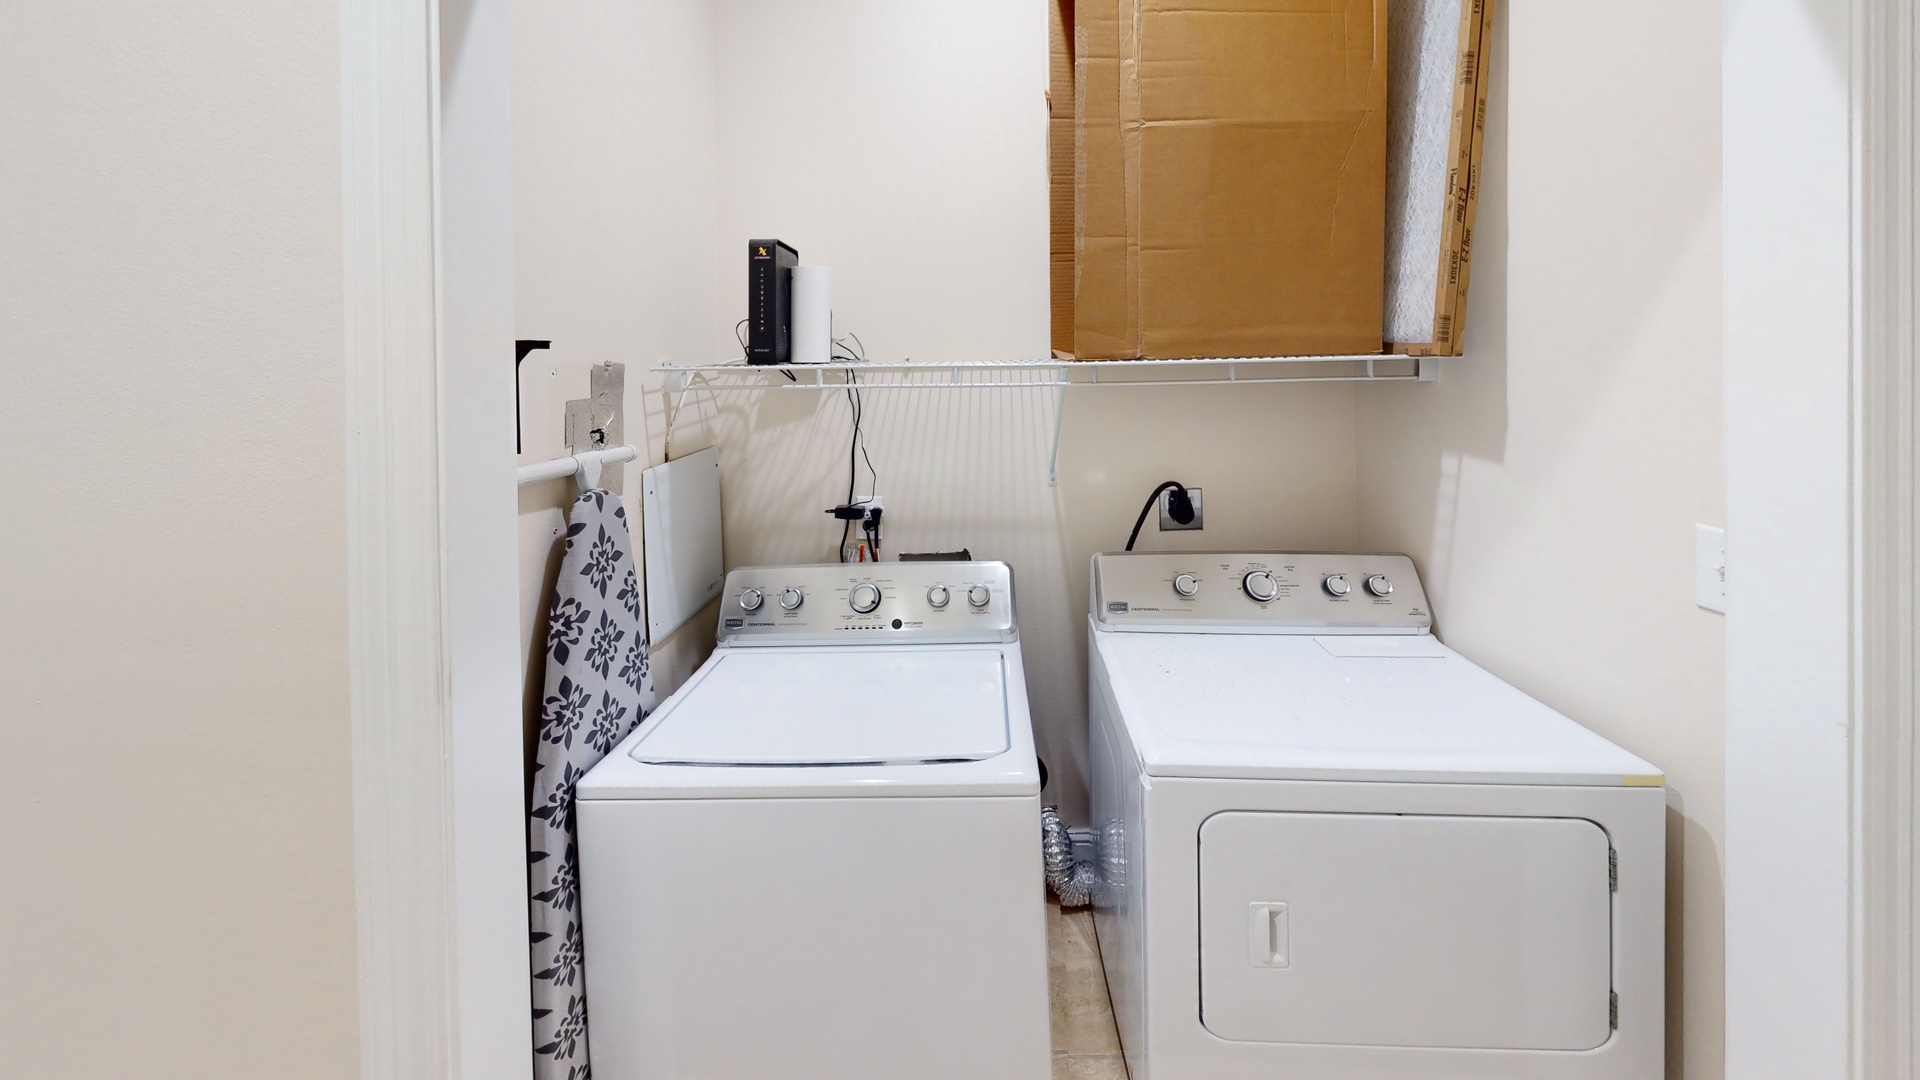 Kiran-A101-Second floor laundry